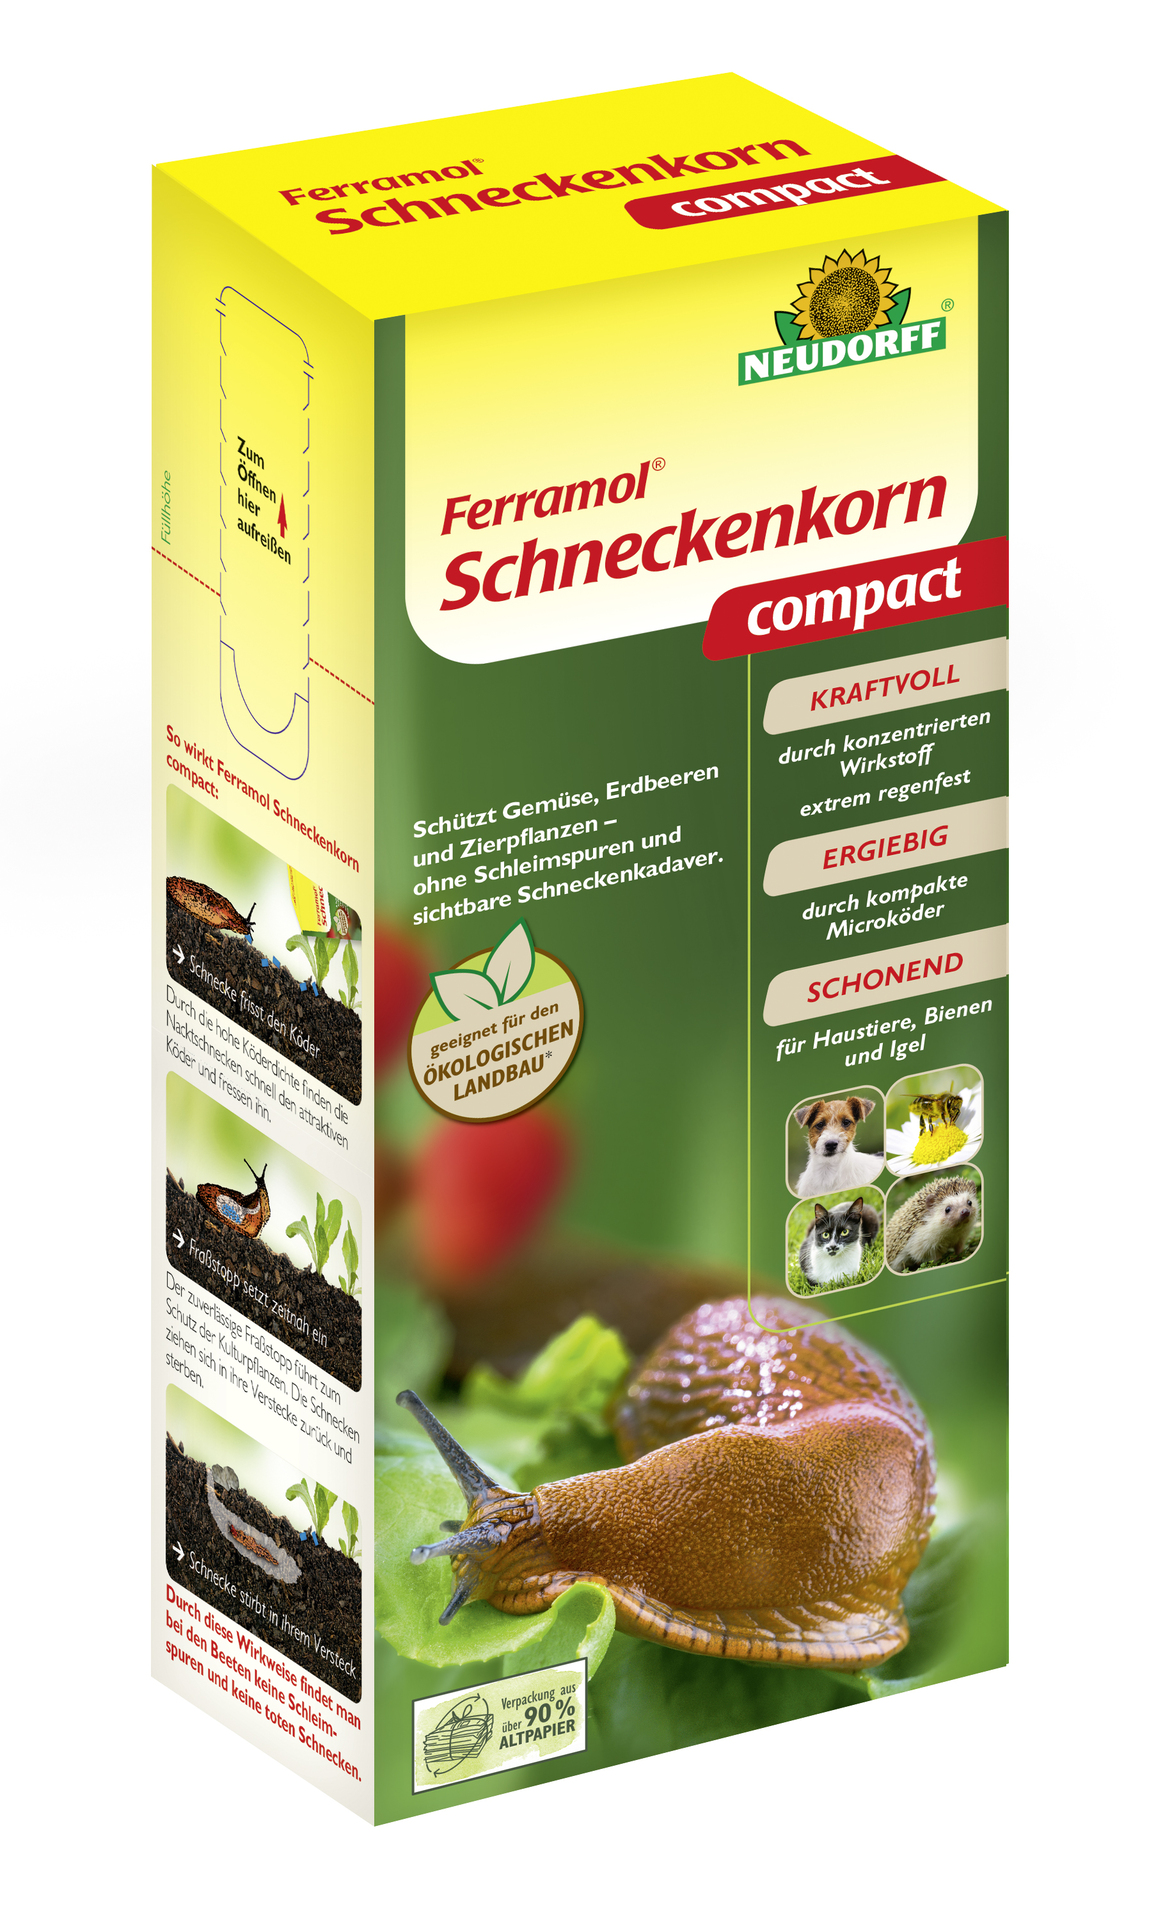 W. Neudorff GmbH KG Ferramol Schneckenkorn Compact